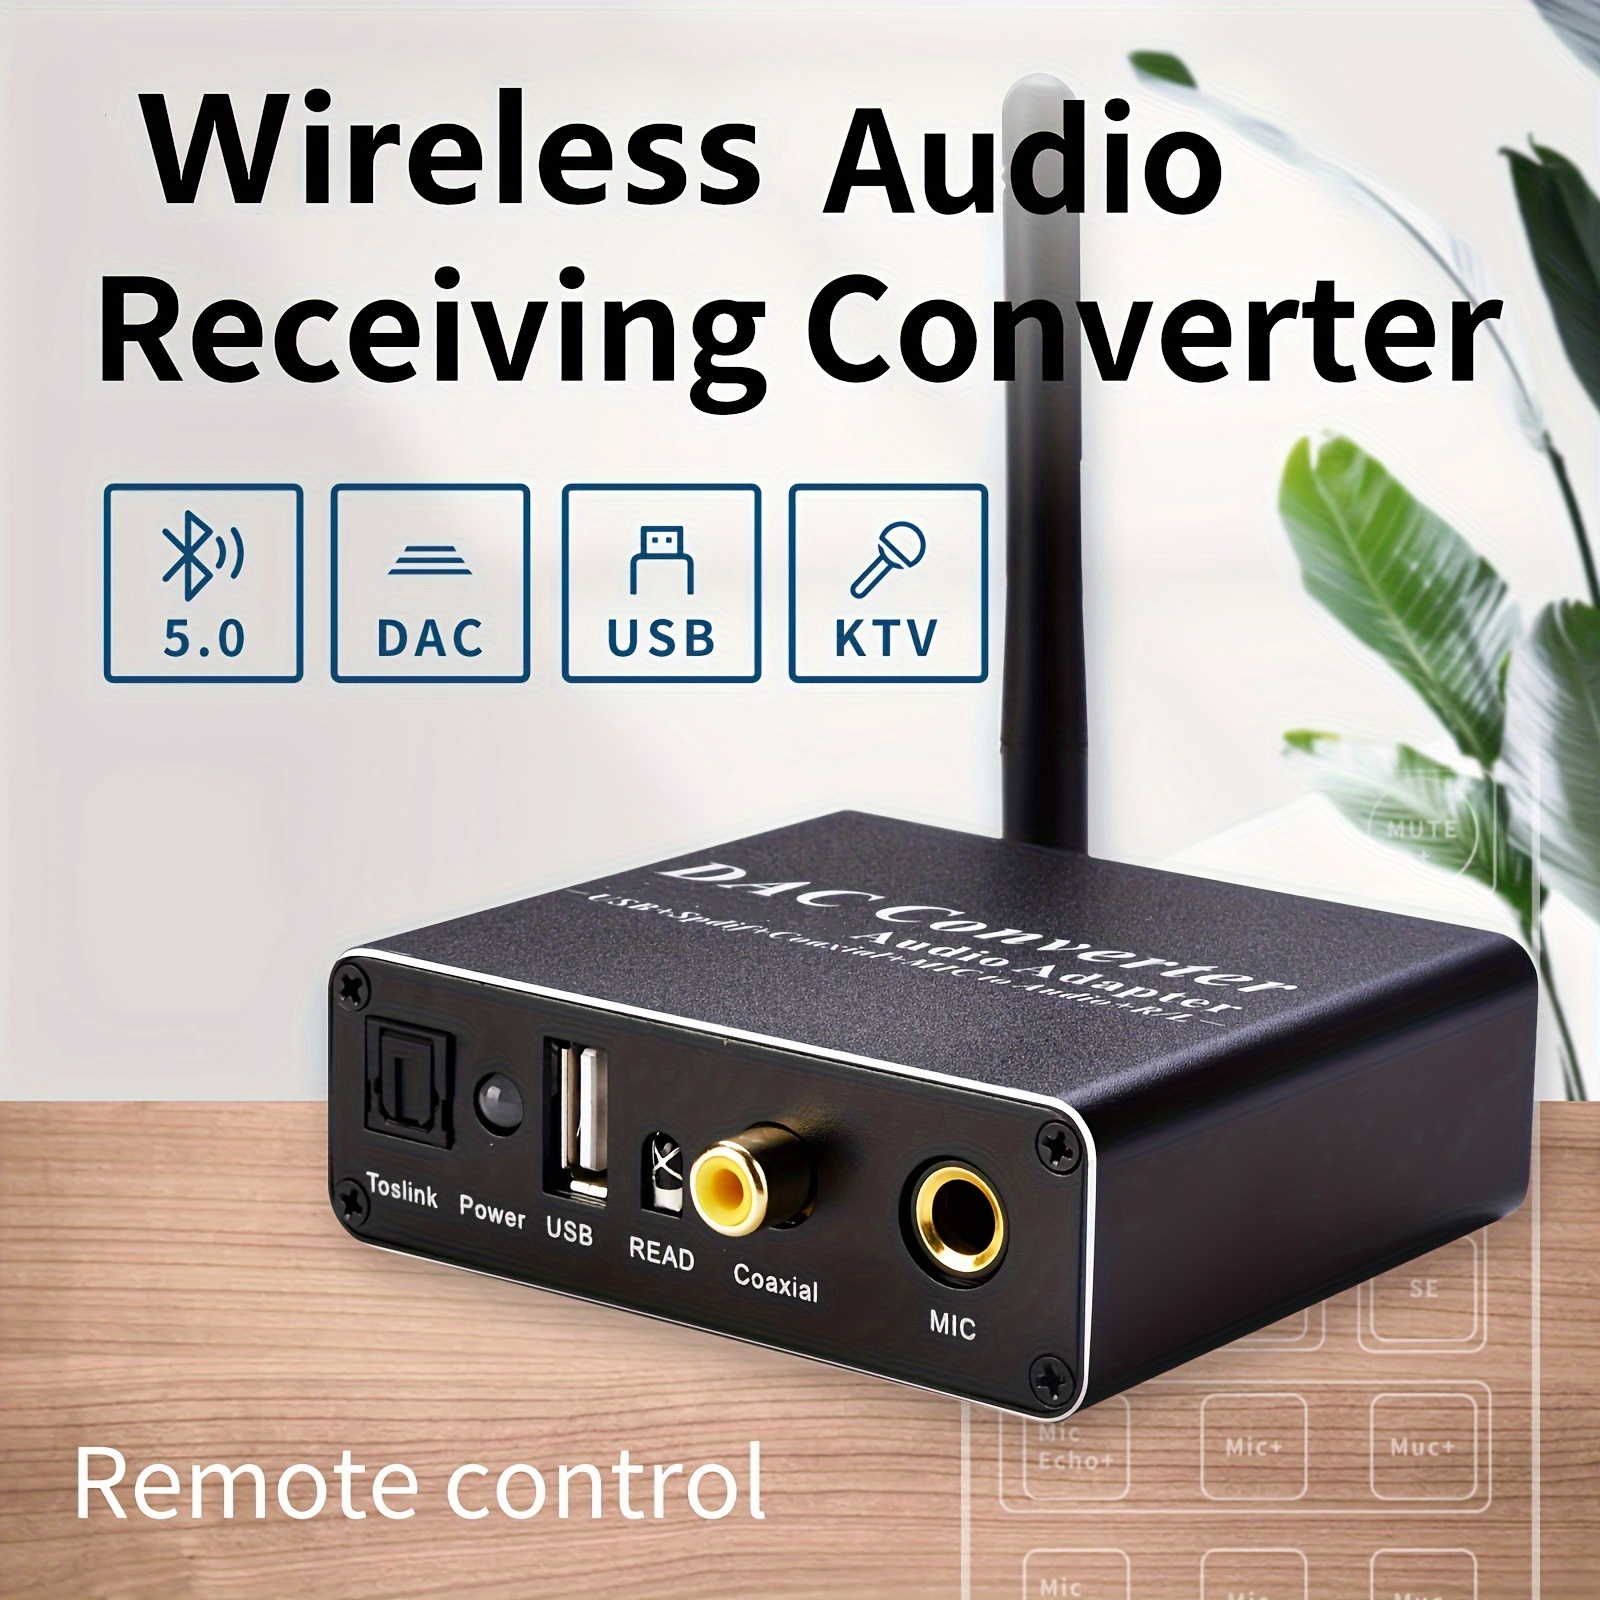 Portable Audio Converter with Remote Control - PulseTV